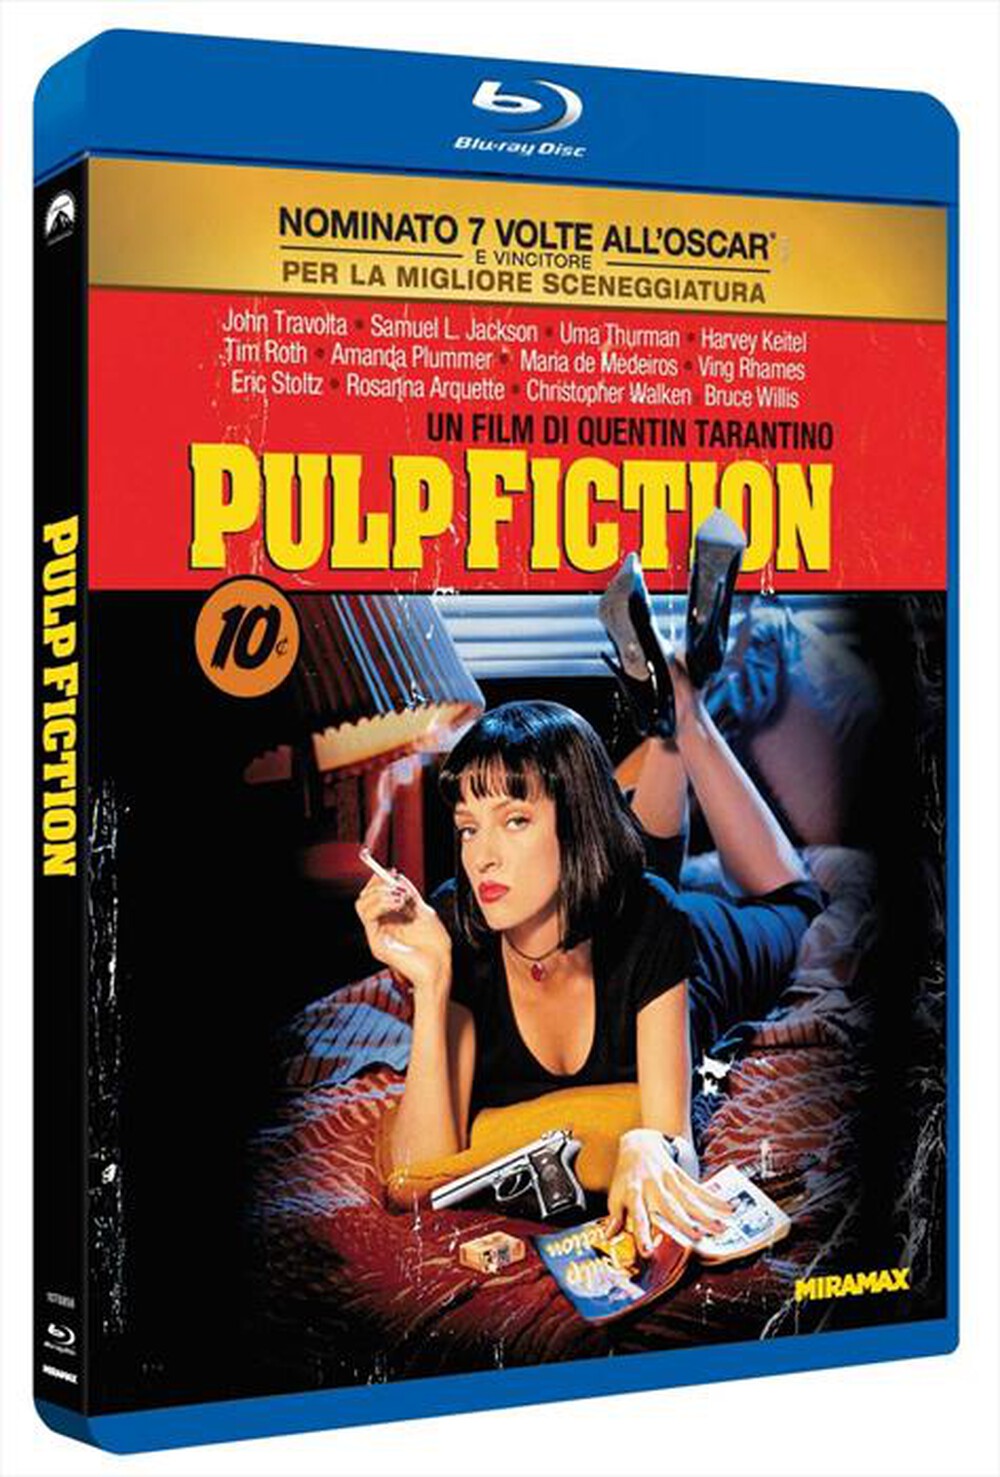 "Paramount Pictures - Pulp Fiction"